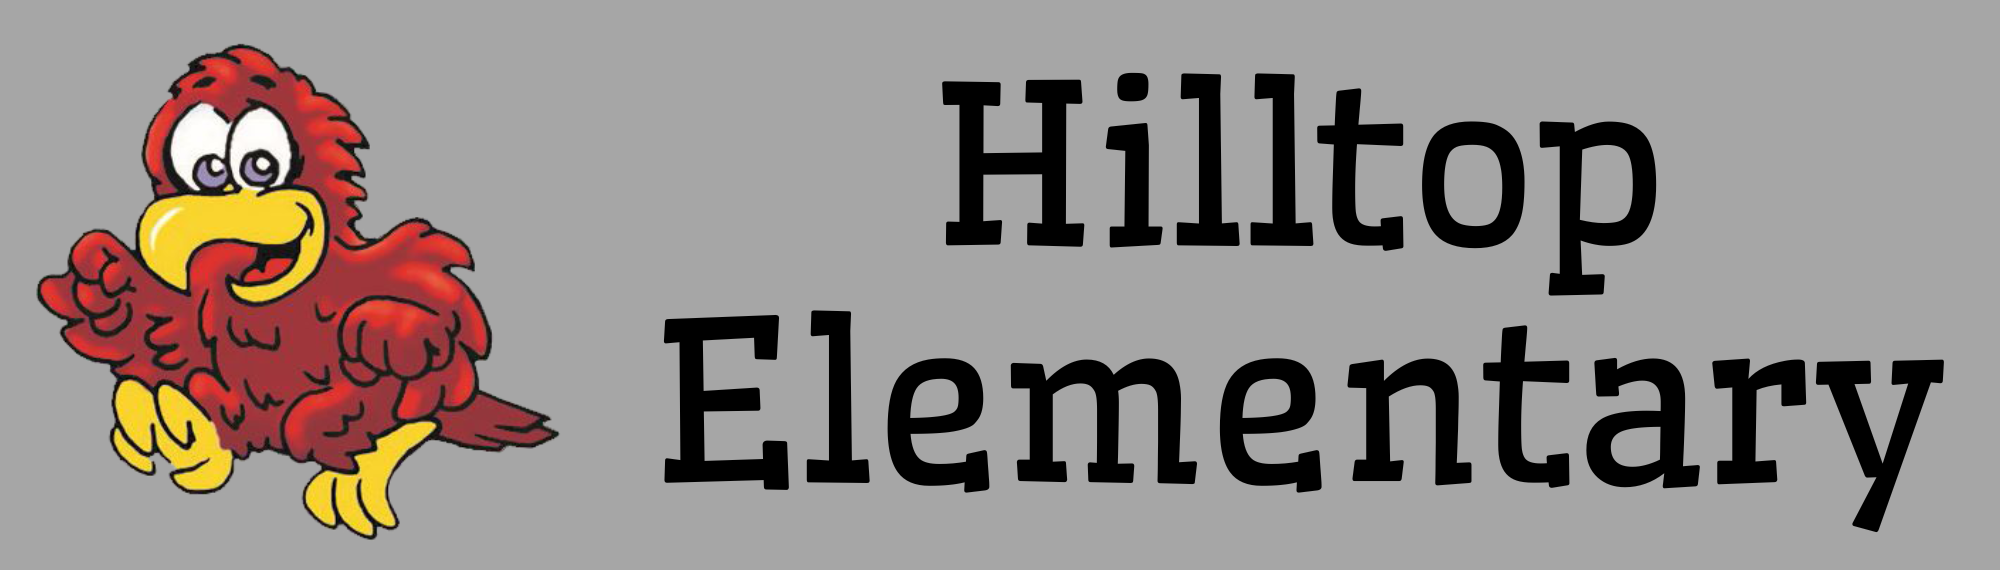 Hilltop Elementary